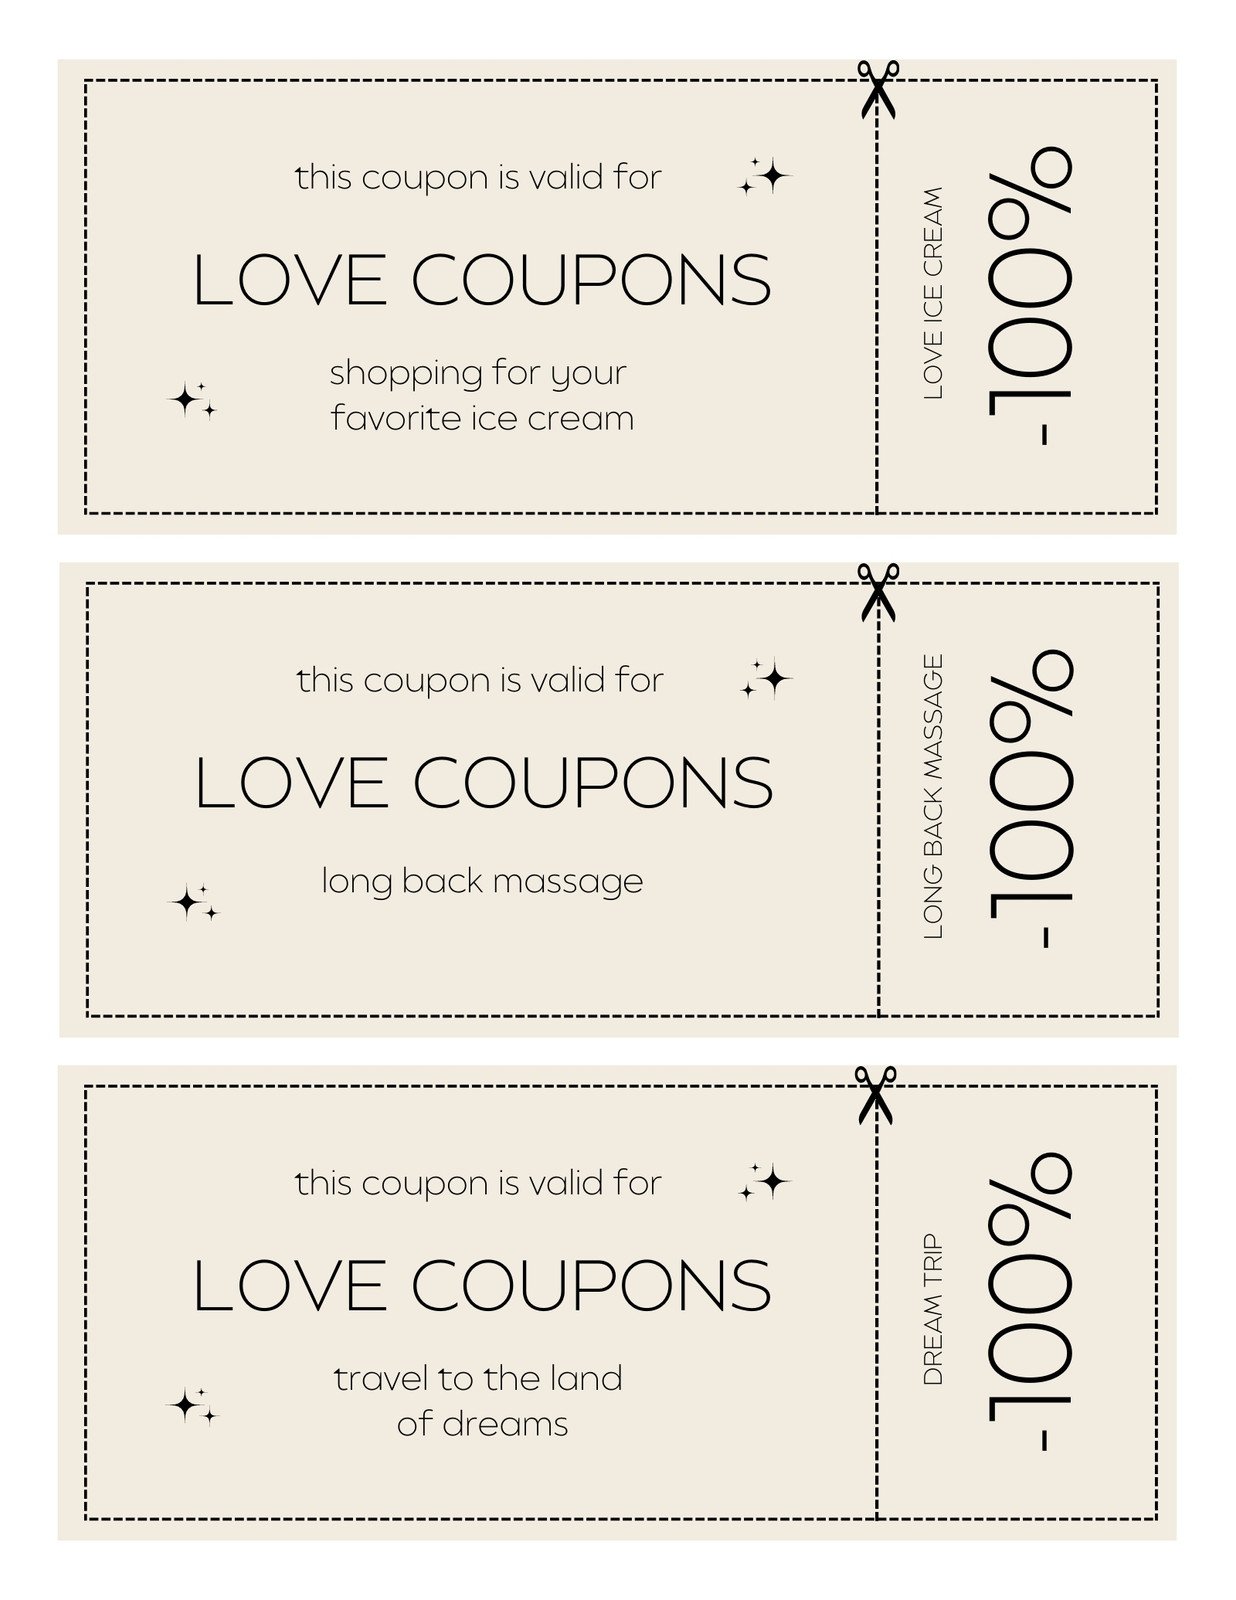 Get free sample coupons